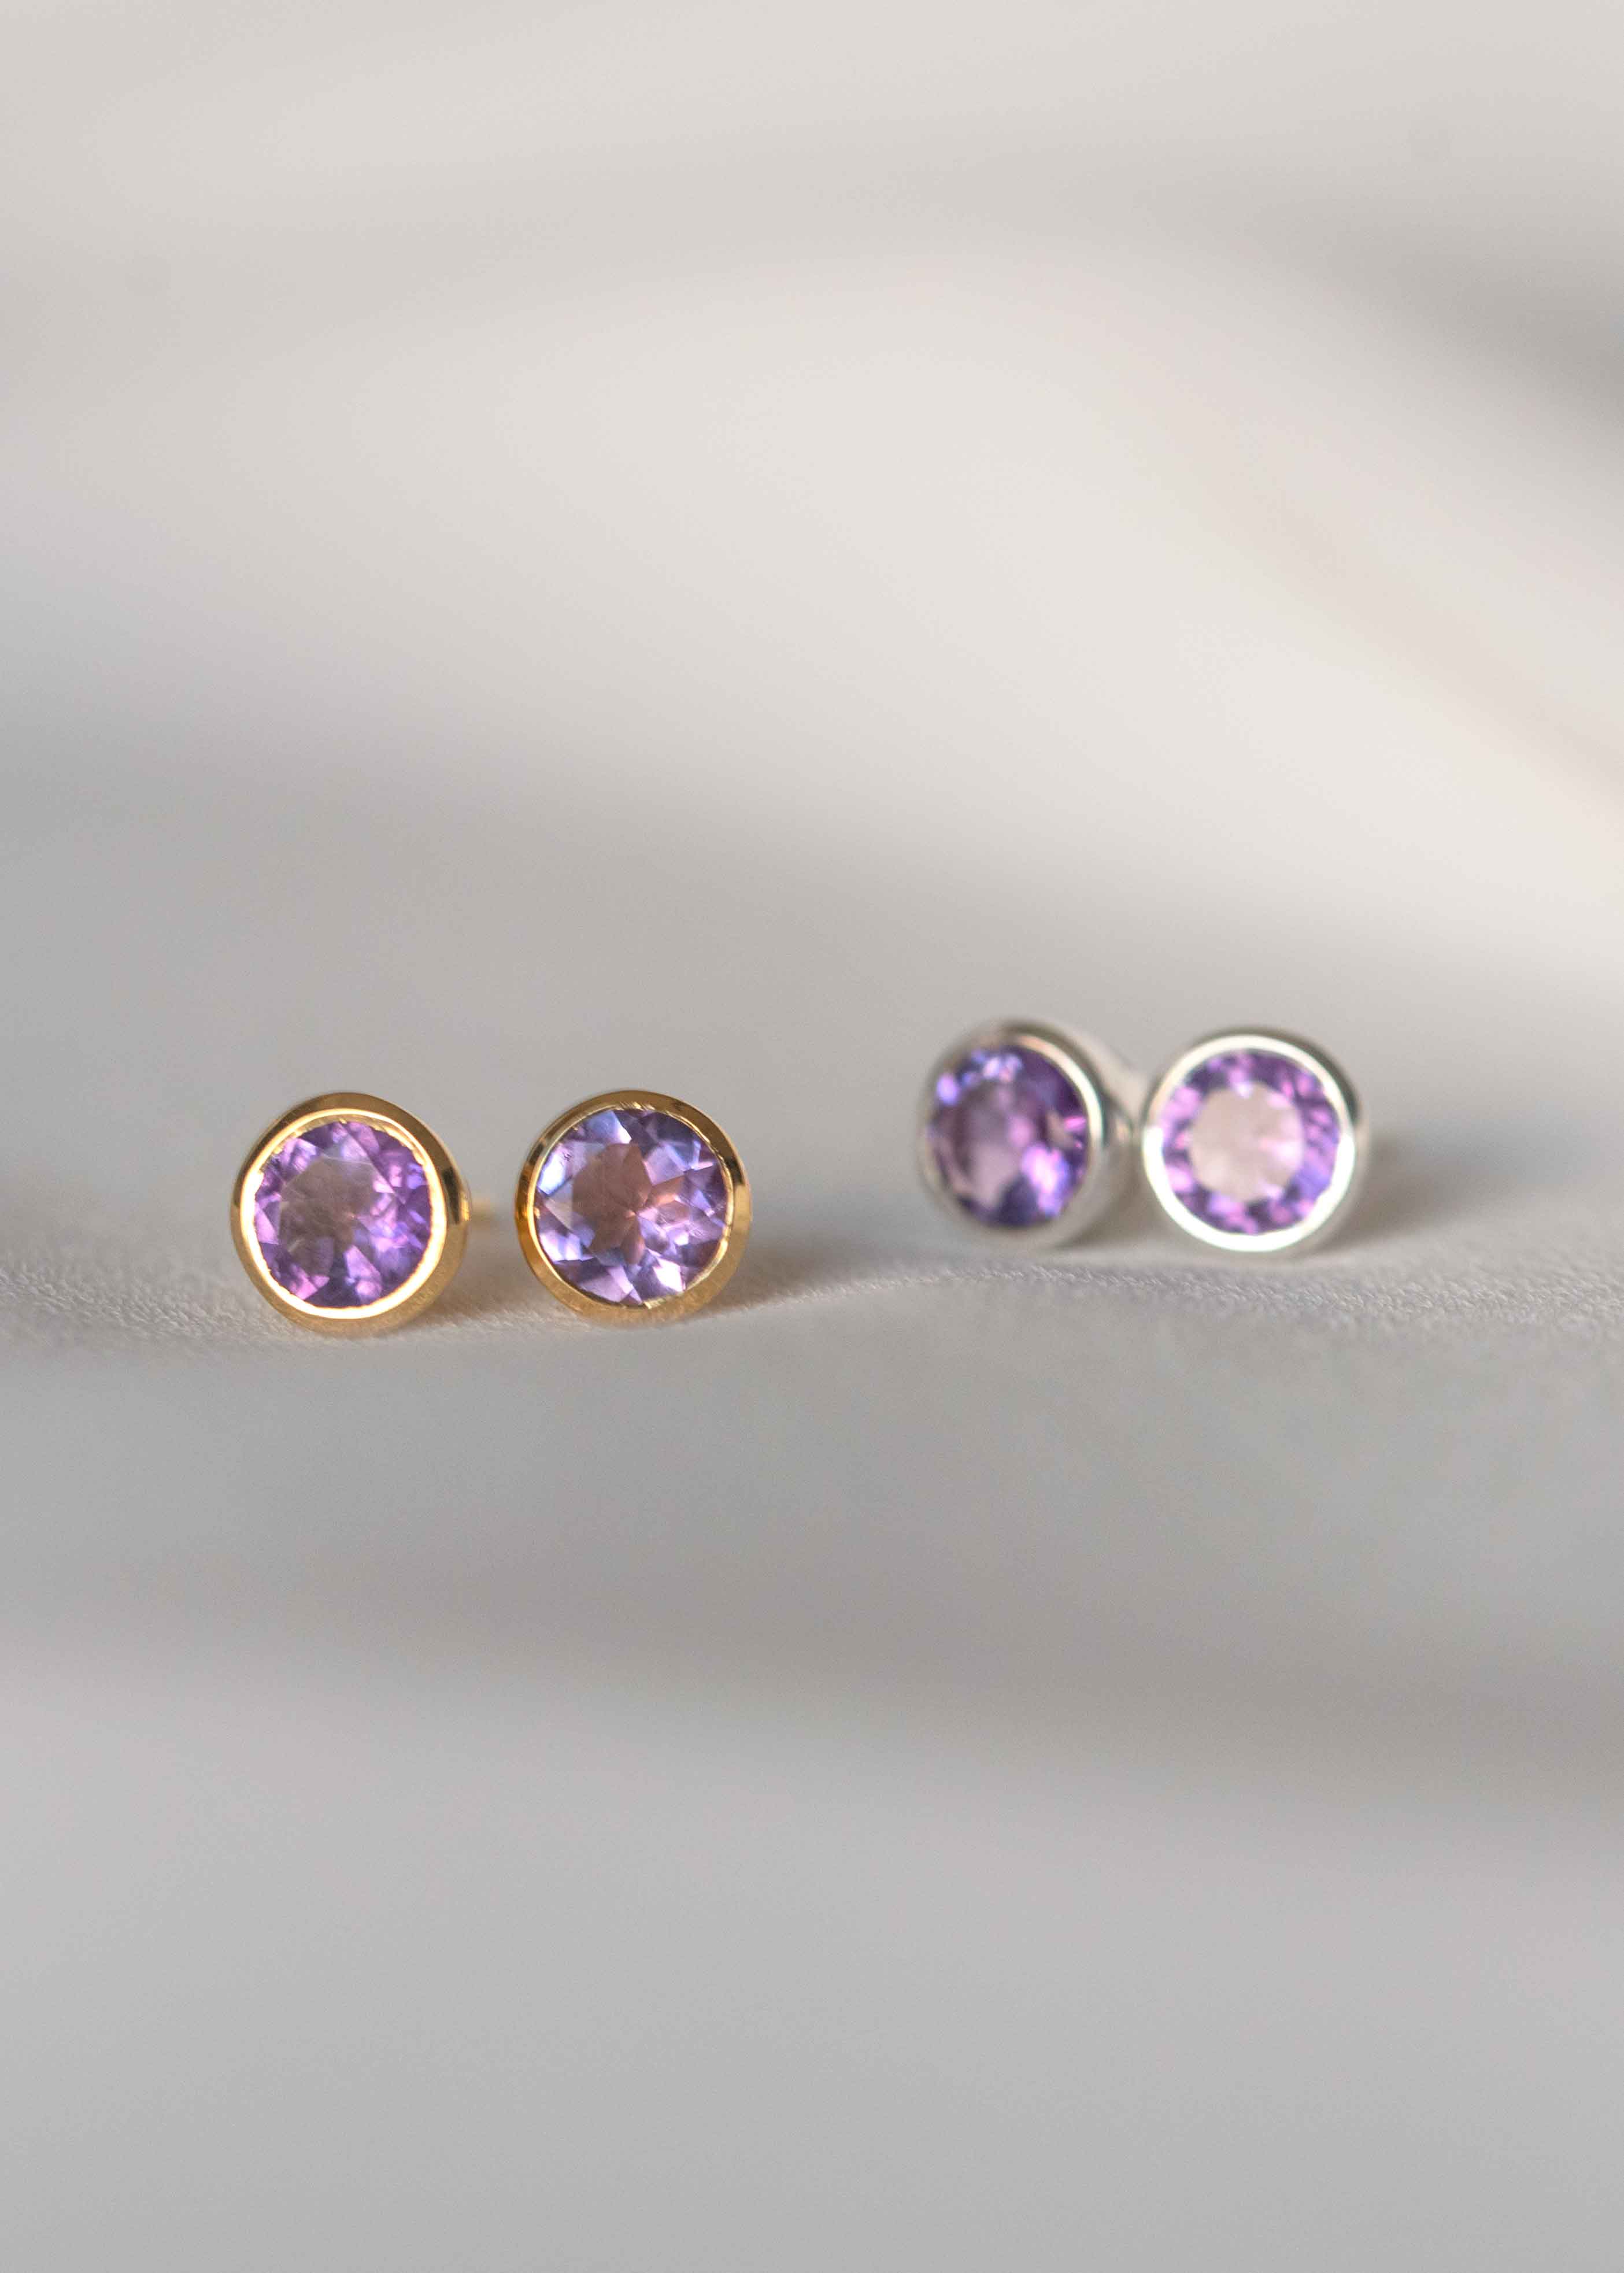 Amethyst gold Stud Earrings February Birthstone Birthday Gifts for women